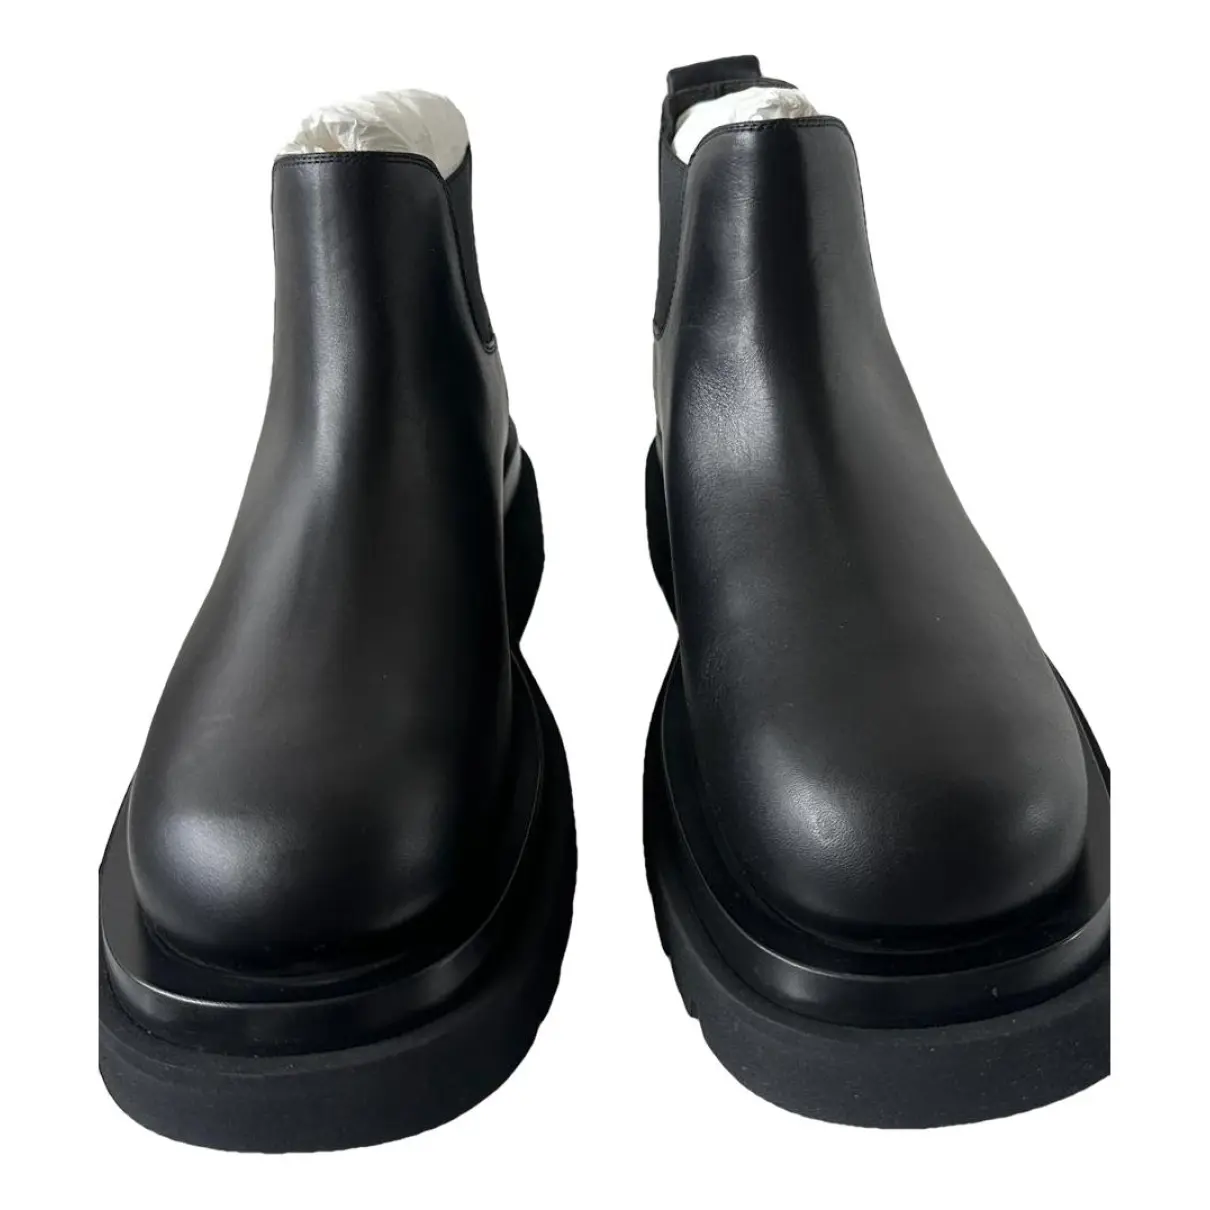 Lug leather boots